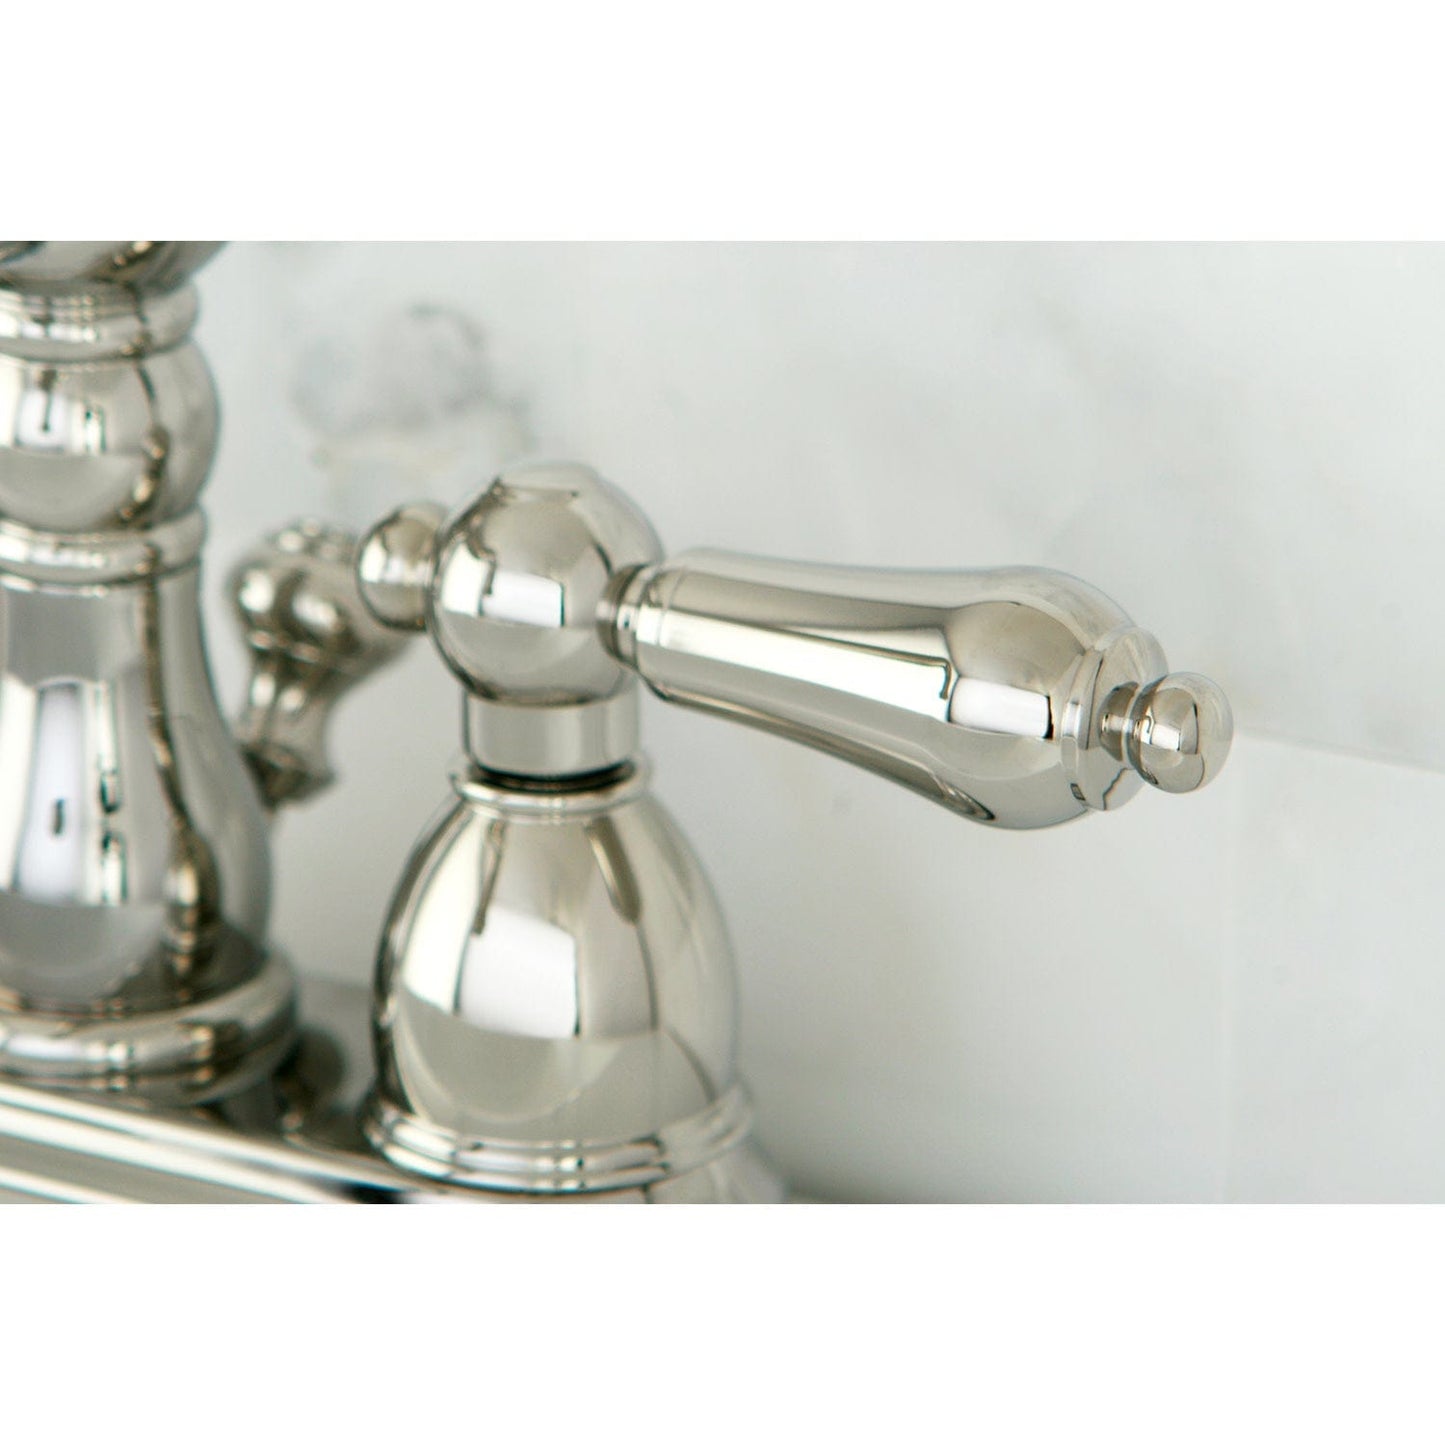 KINGSTON Brass Heritage Centerset Bathroom Faucet - Polished Nickel